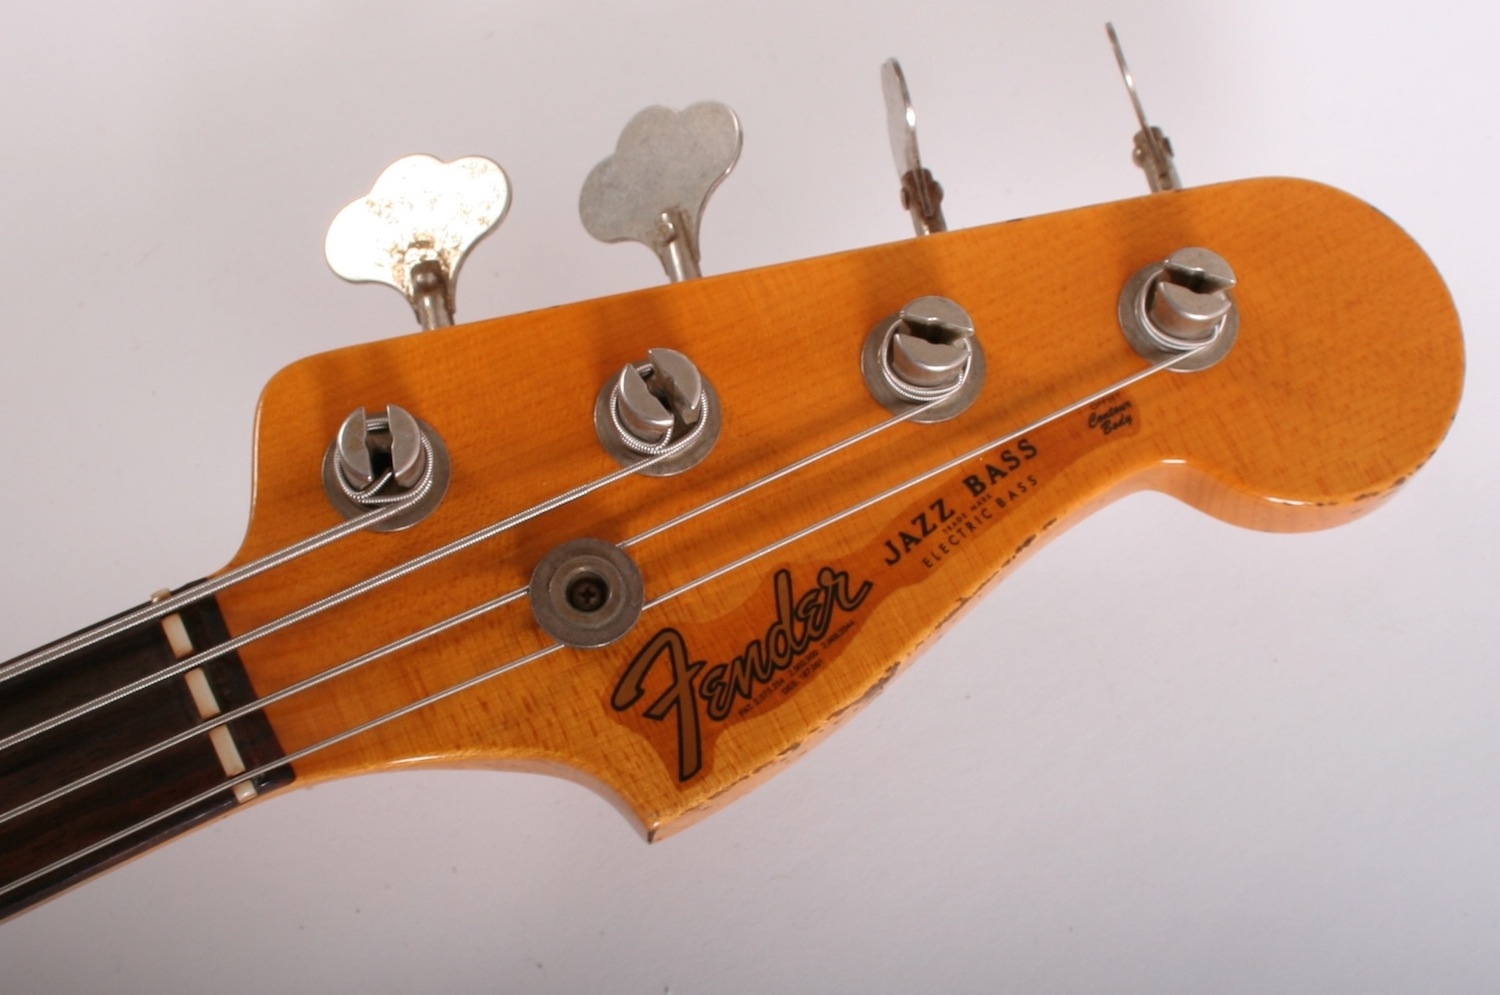 Phatt bass. Fender Jazz Bass Custom shop цвет дерева. Фендер джаз бас голова. Бас гитара Tokai Jazz Bass. Jazz Bass Heavy Relic.